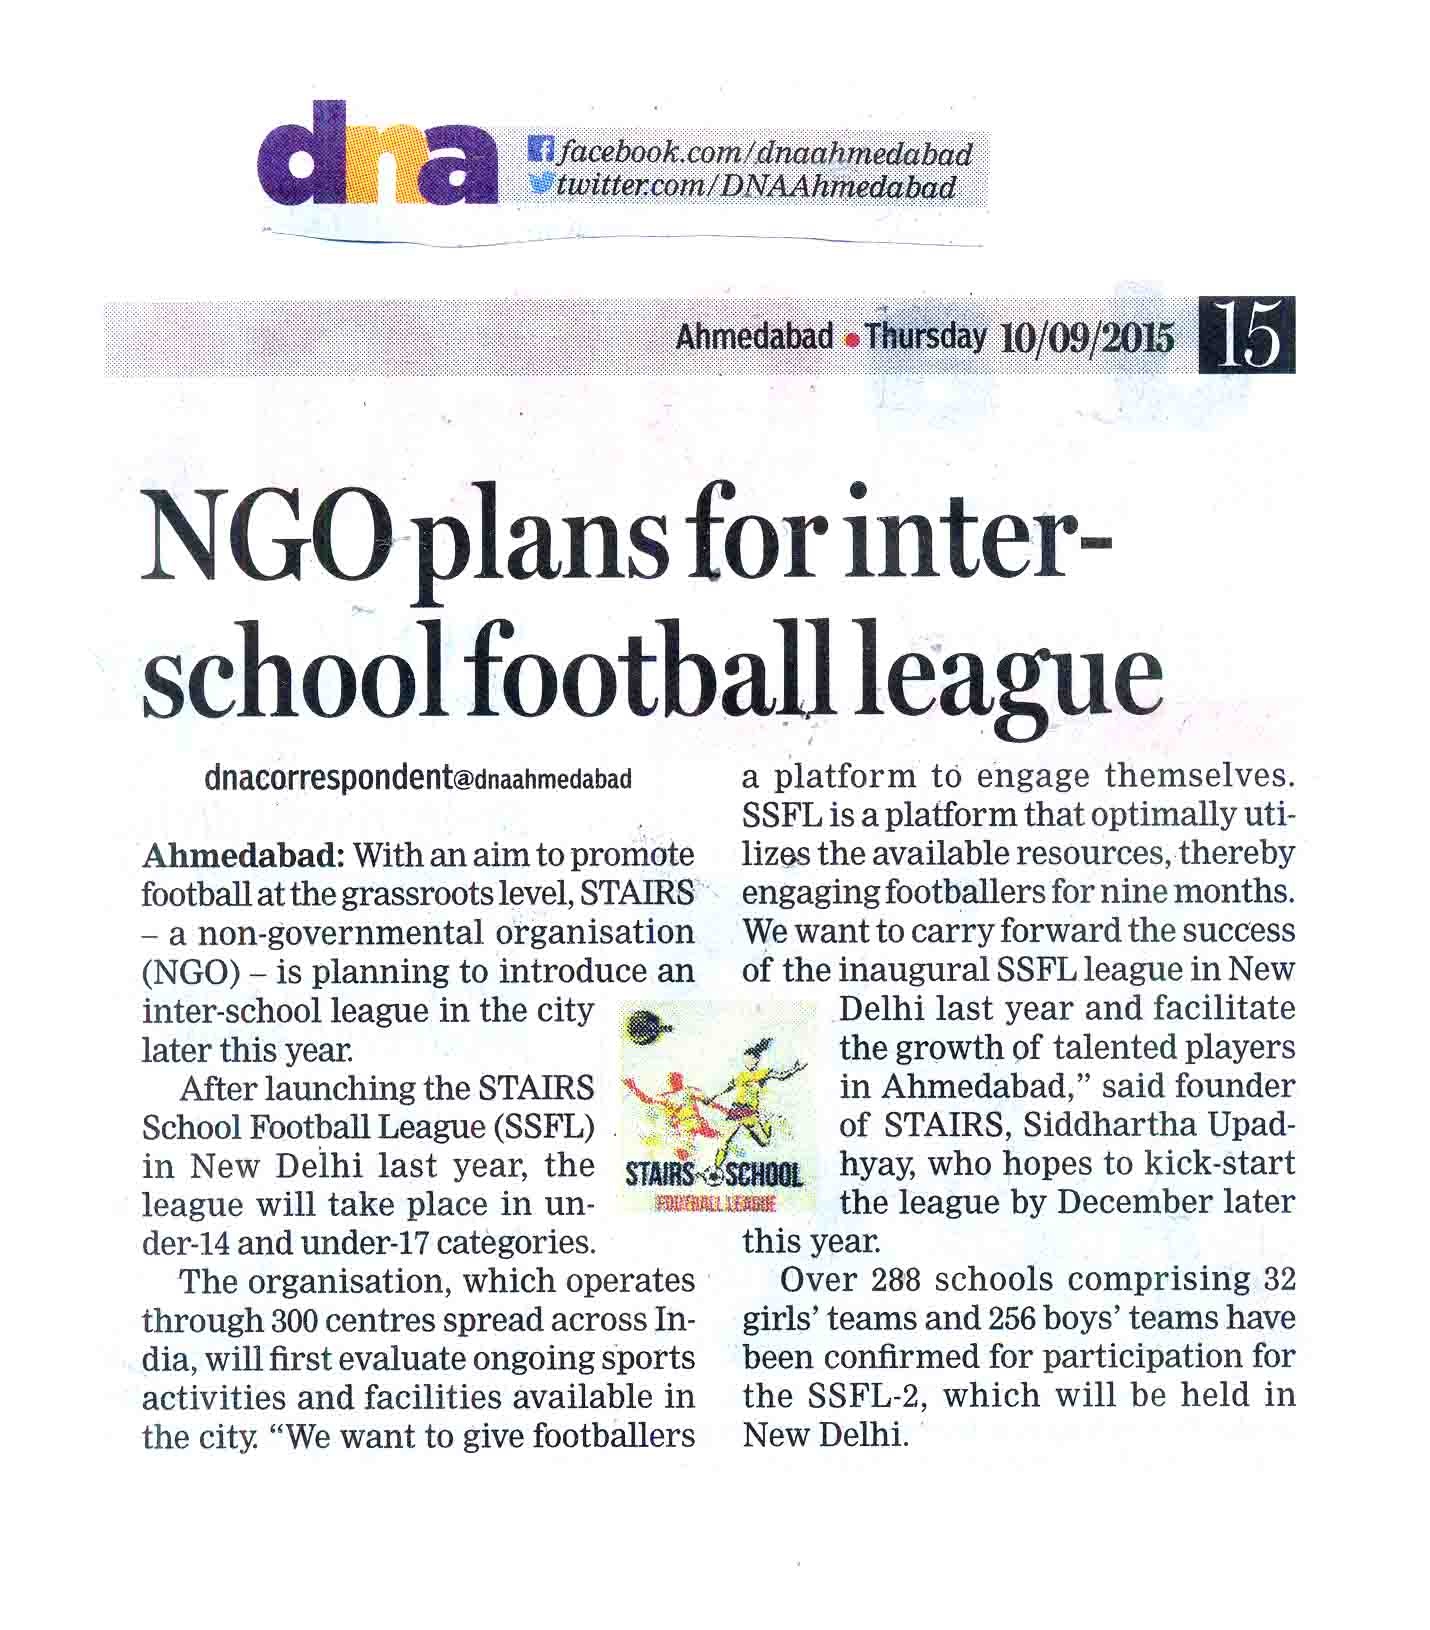 NGO PLANS FOR INTER-SCHOOL FOOTBALL LEAGUE